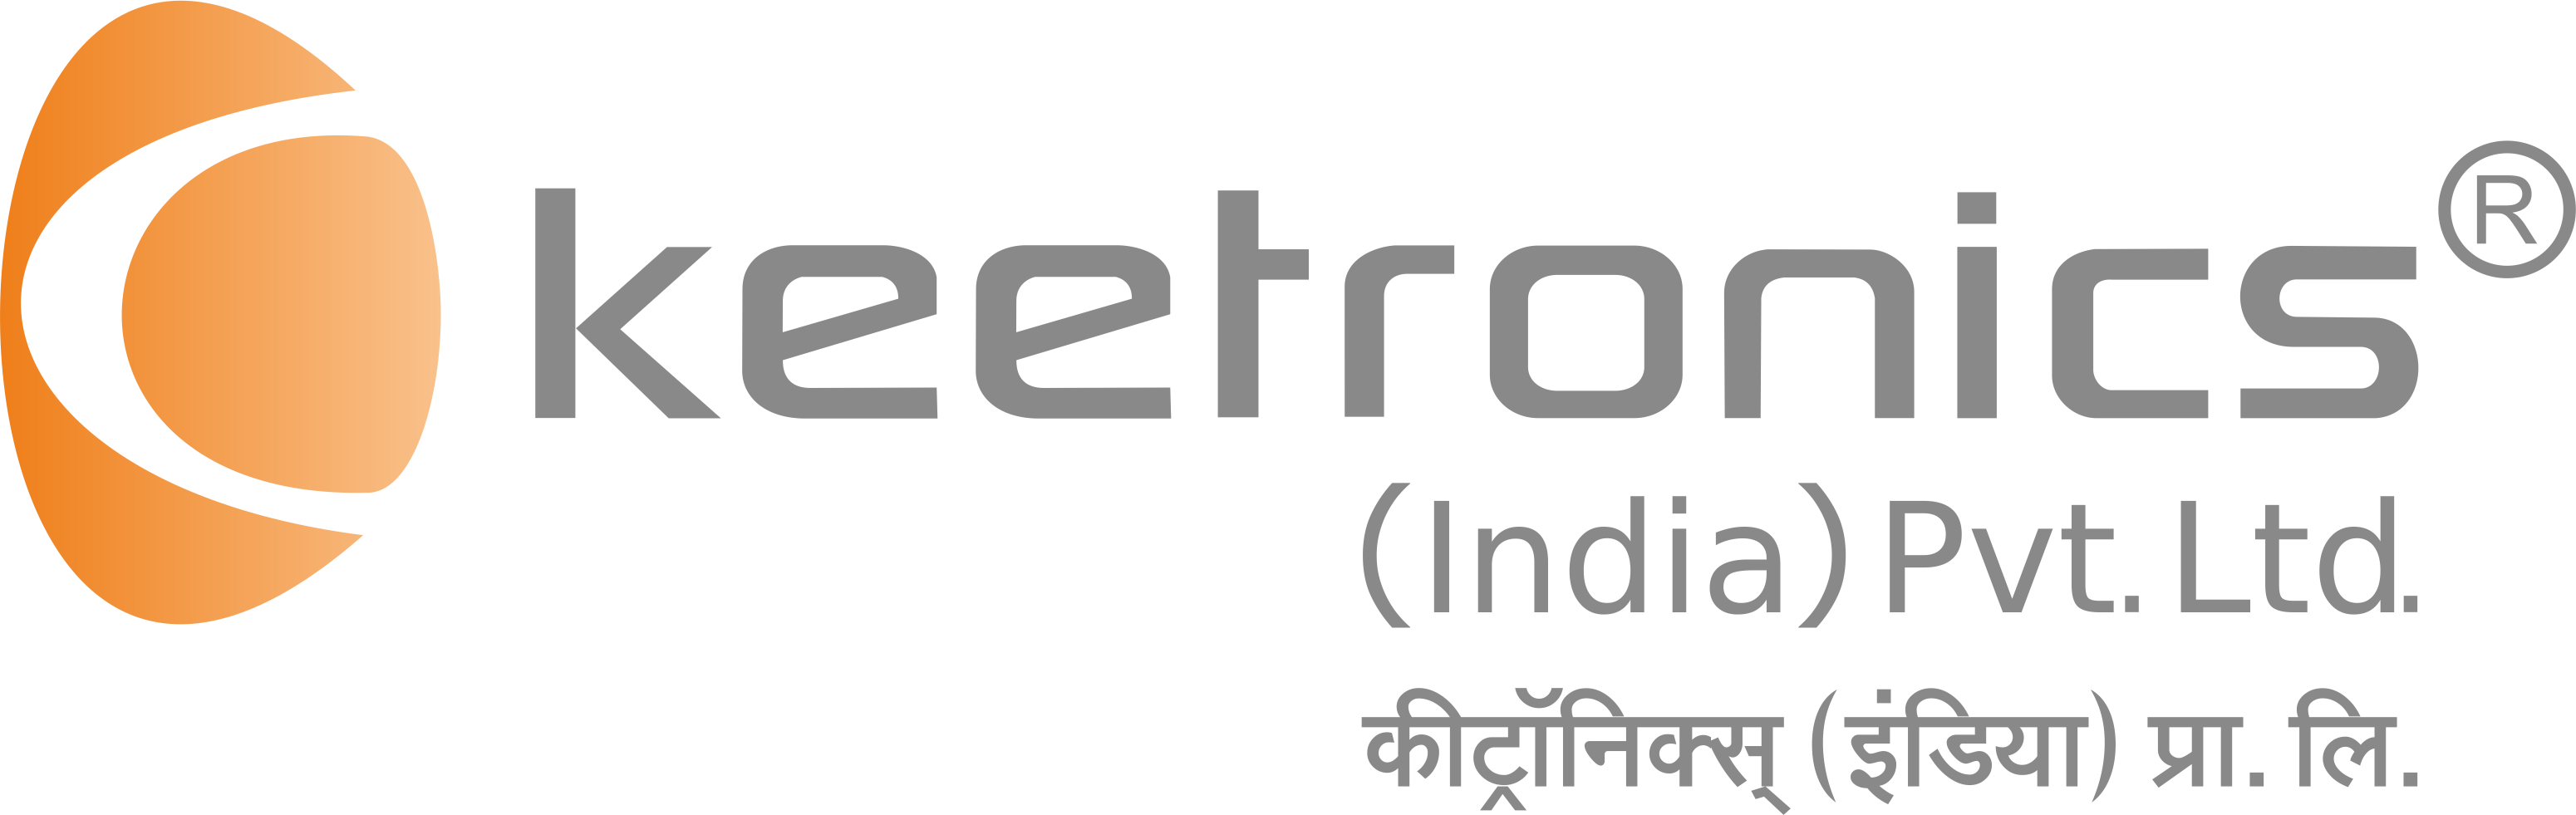 Keetronics (India) Pvt. Ltd.